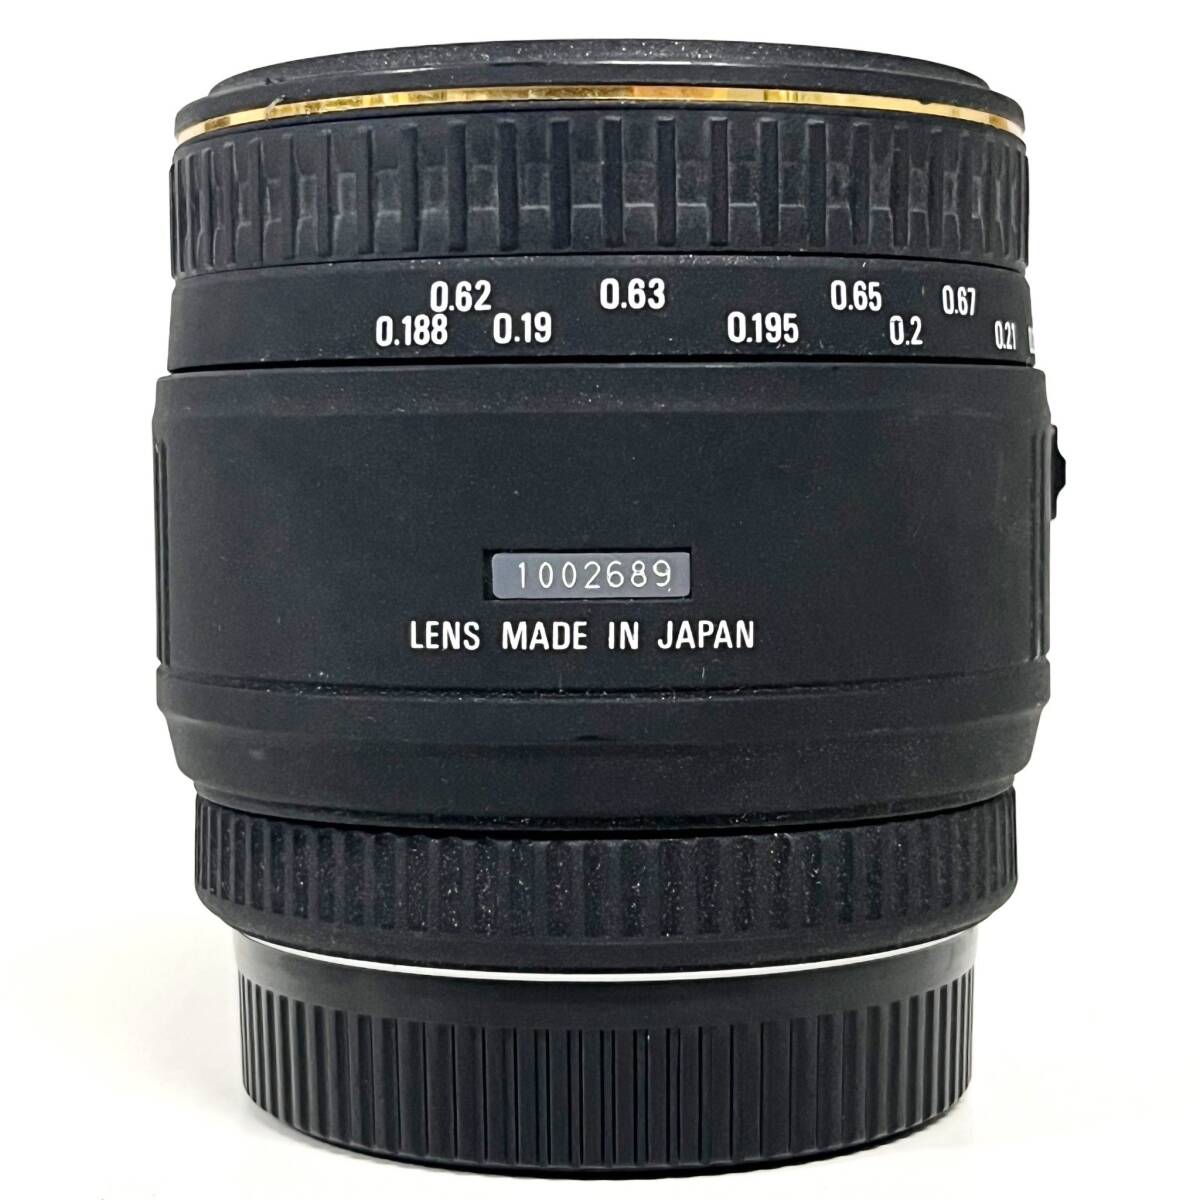 1 jpy ~[ operation not yet verification ] Sigma EX SIGMA 50mm 1:2.8 MACRO single-lens camera for single burnt point lens standard lens G180480